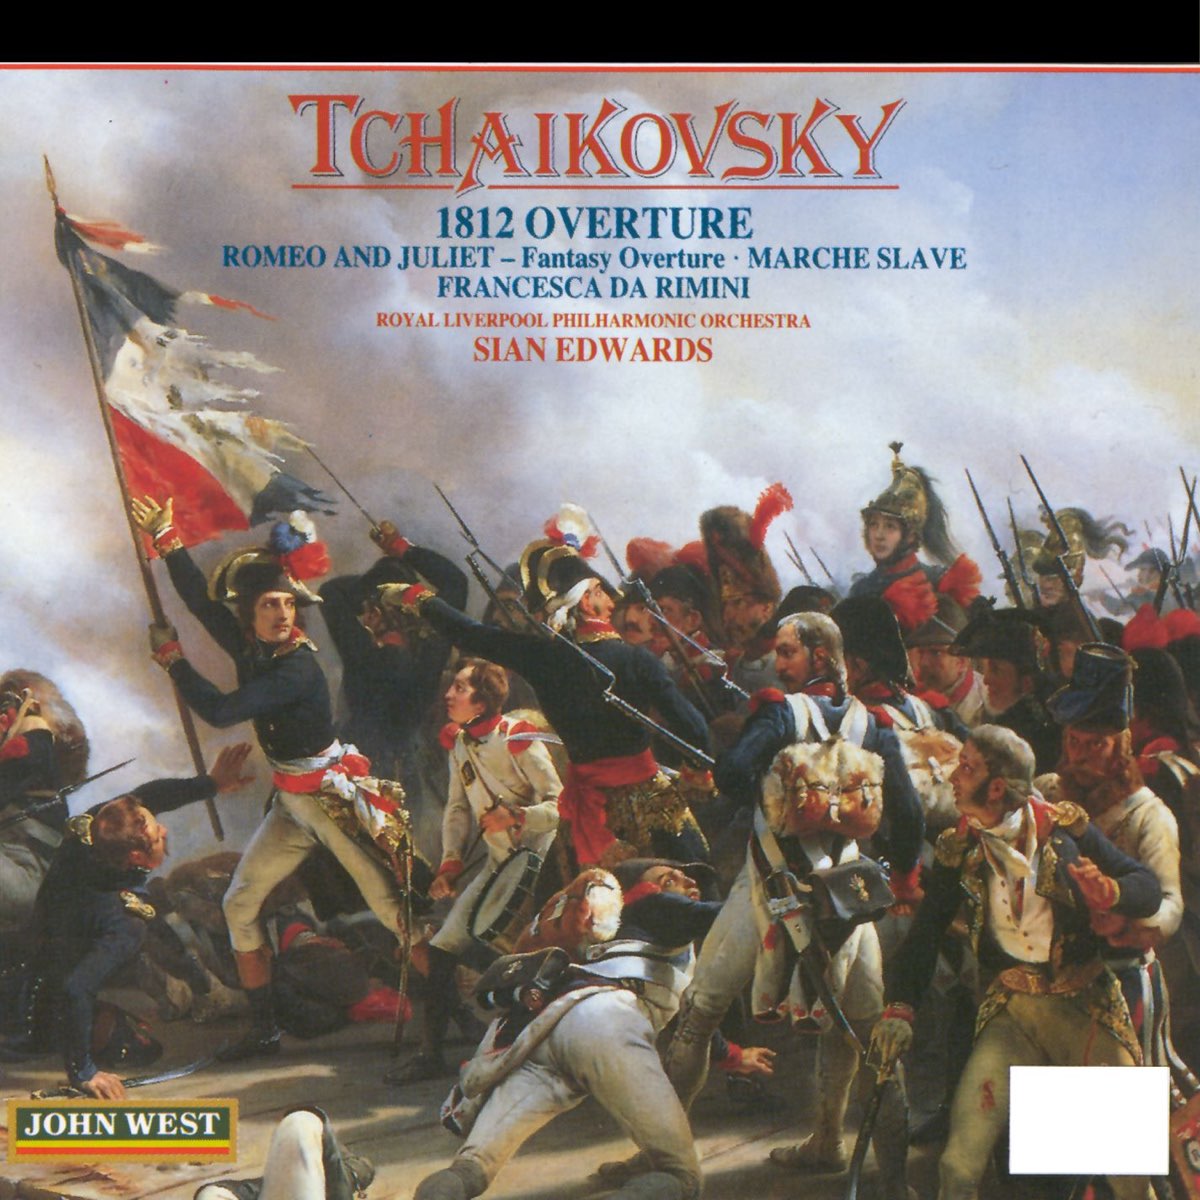 П чайковский увертюра 1812 год. Tchaikovsky: 1812 Overture. 1812 Overture by Pyotr Ilyich Tchaikovsky. Увертюра 1812 год Чайковский.